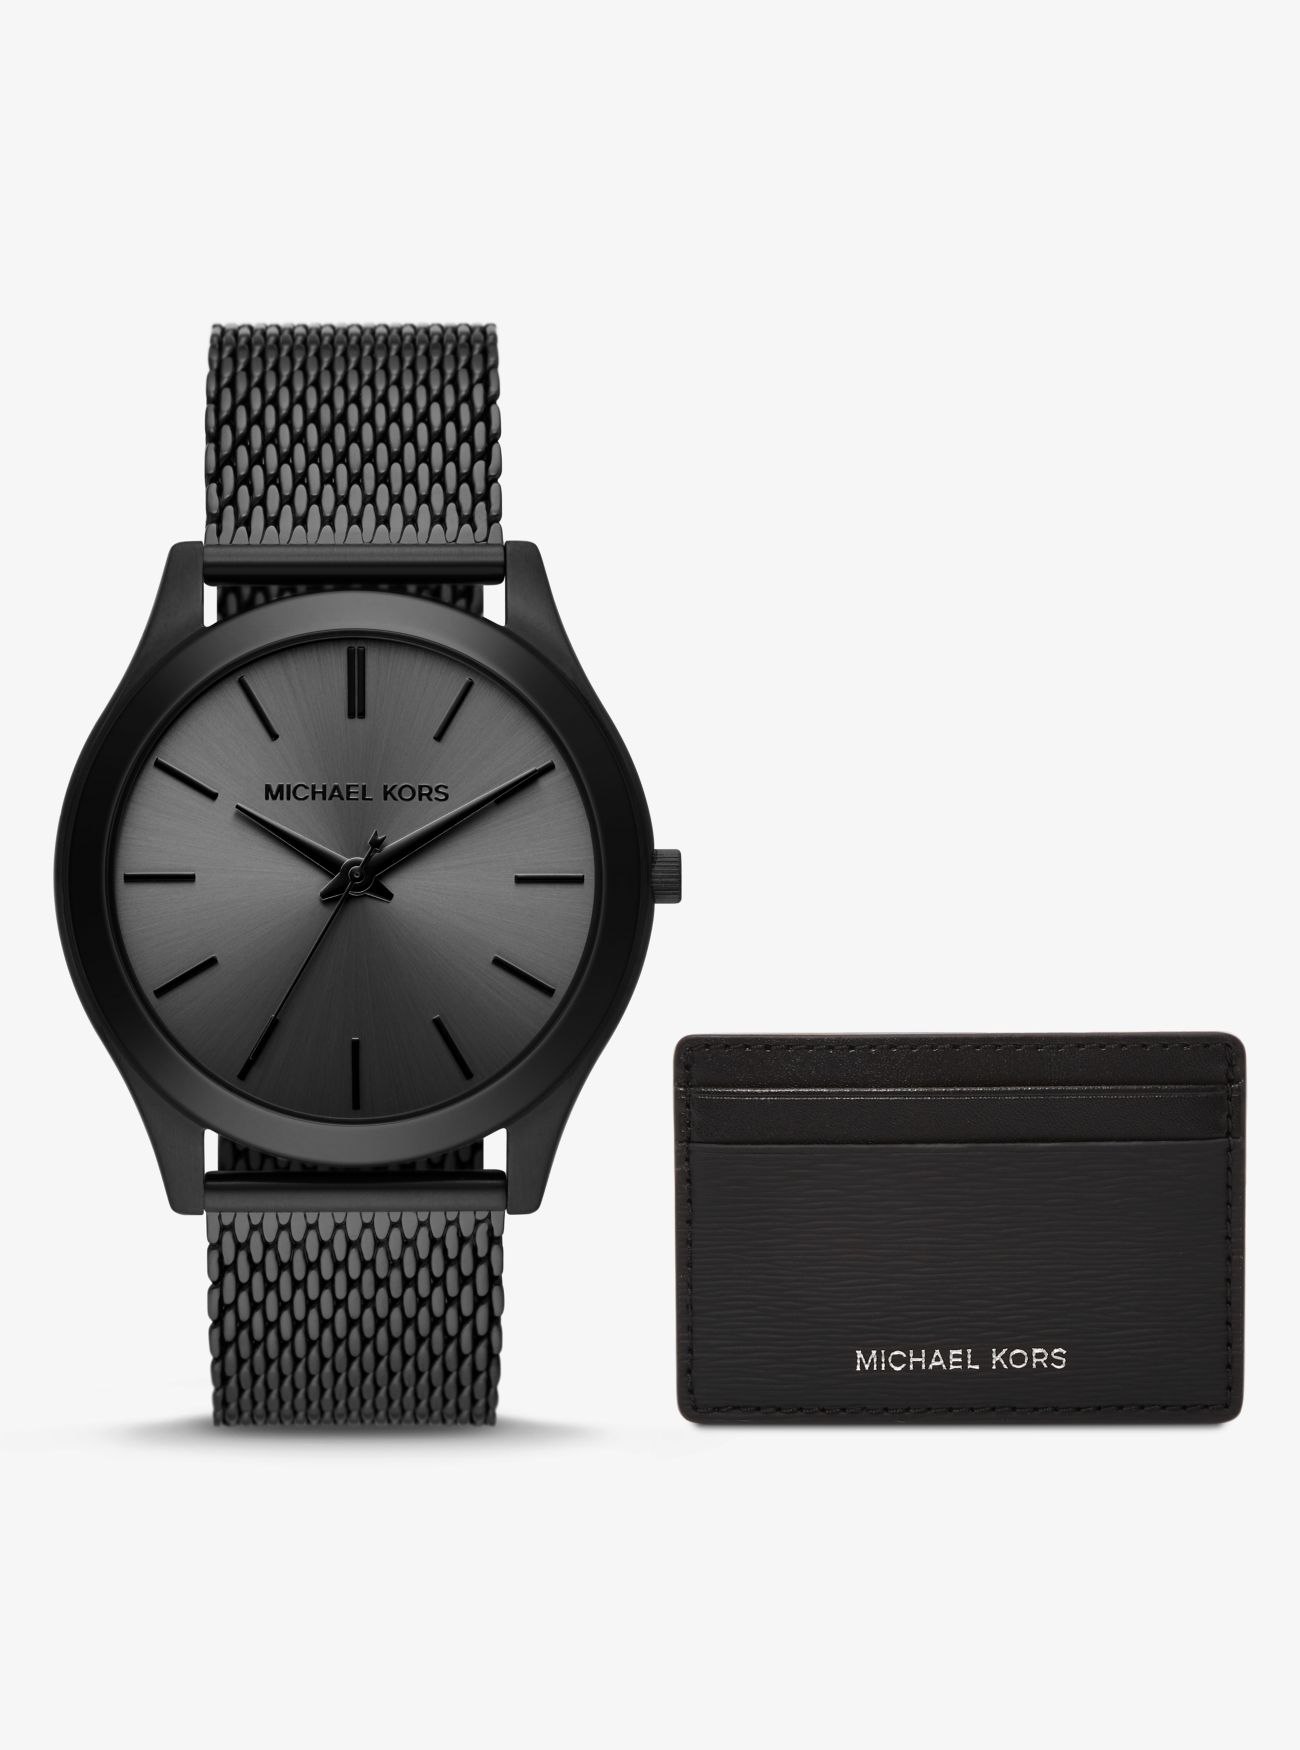 MK Oversized Slim Runway Black-Tone Watch and Card Case Gift Set - Black - Michael Kors